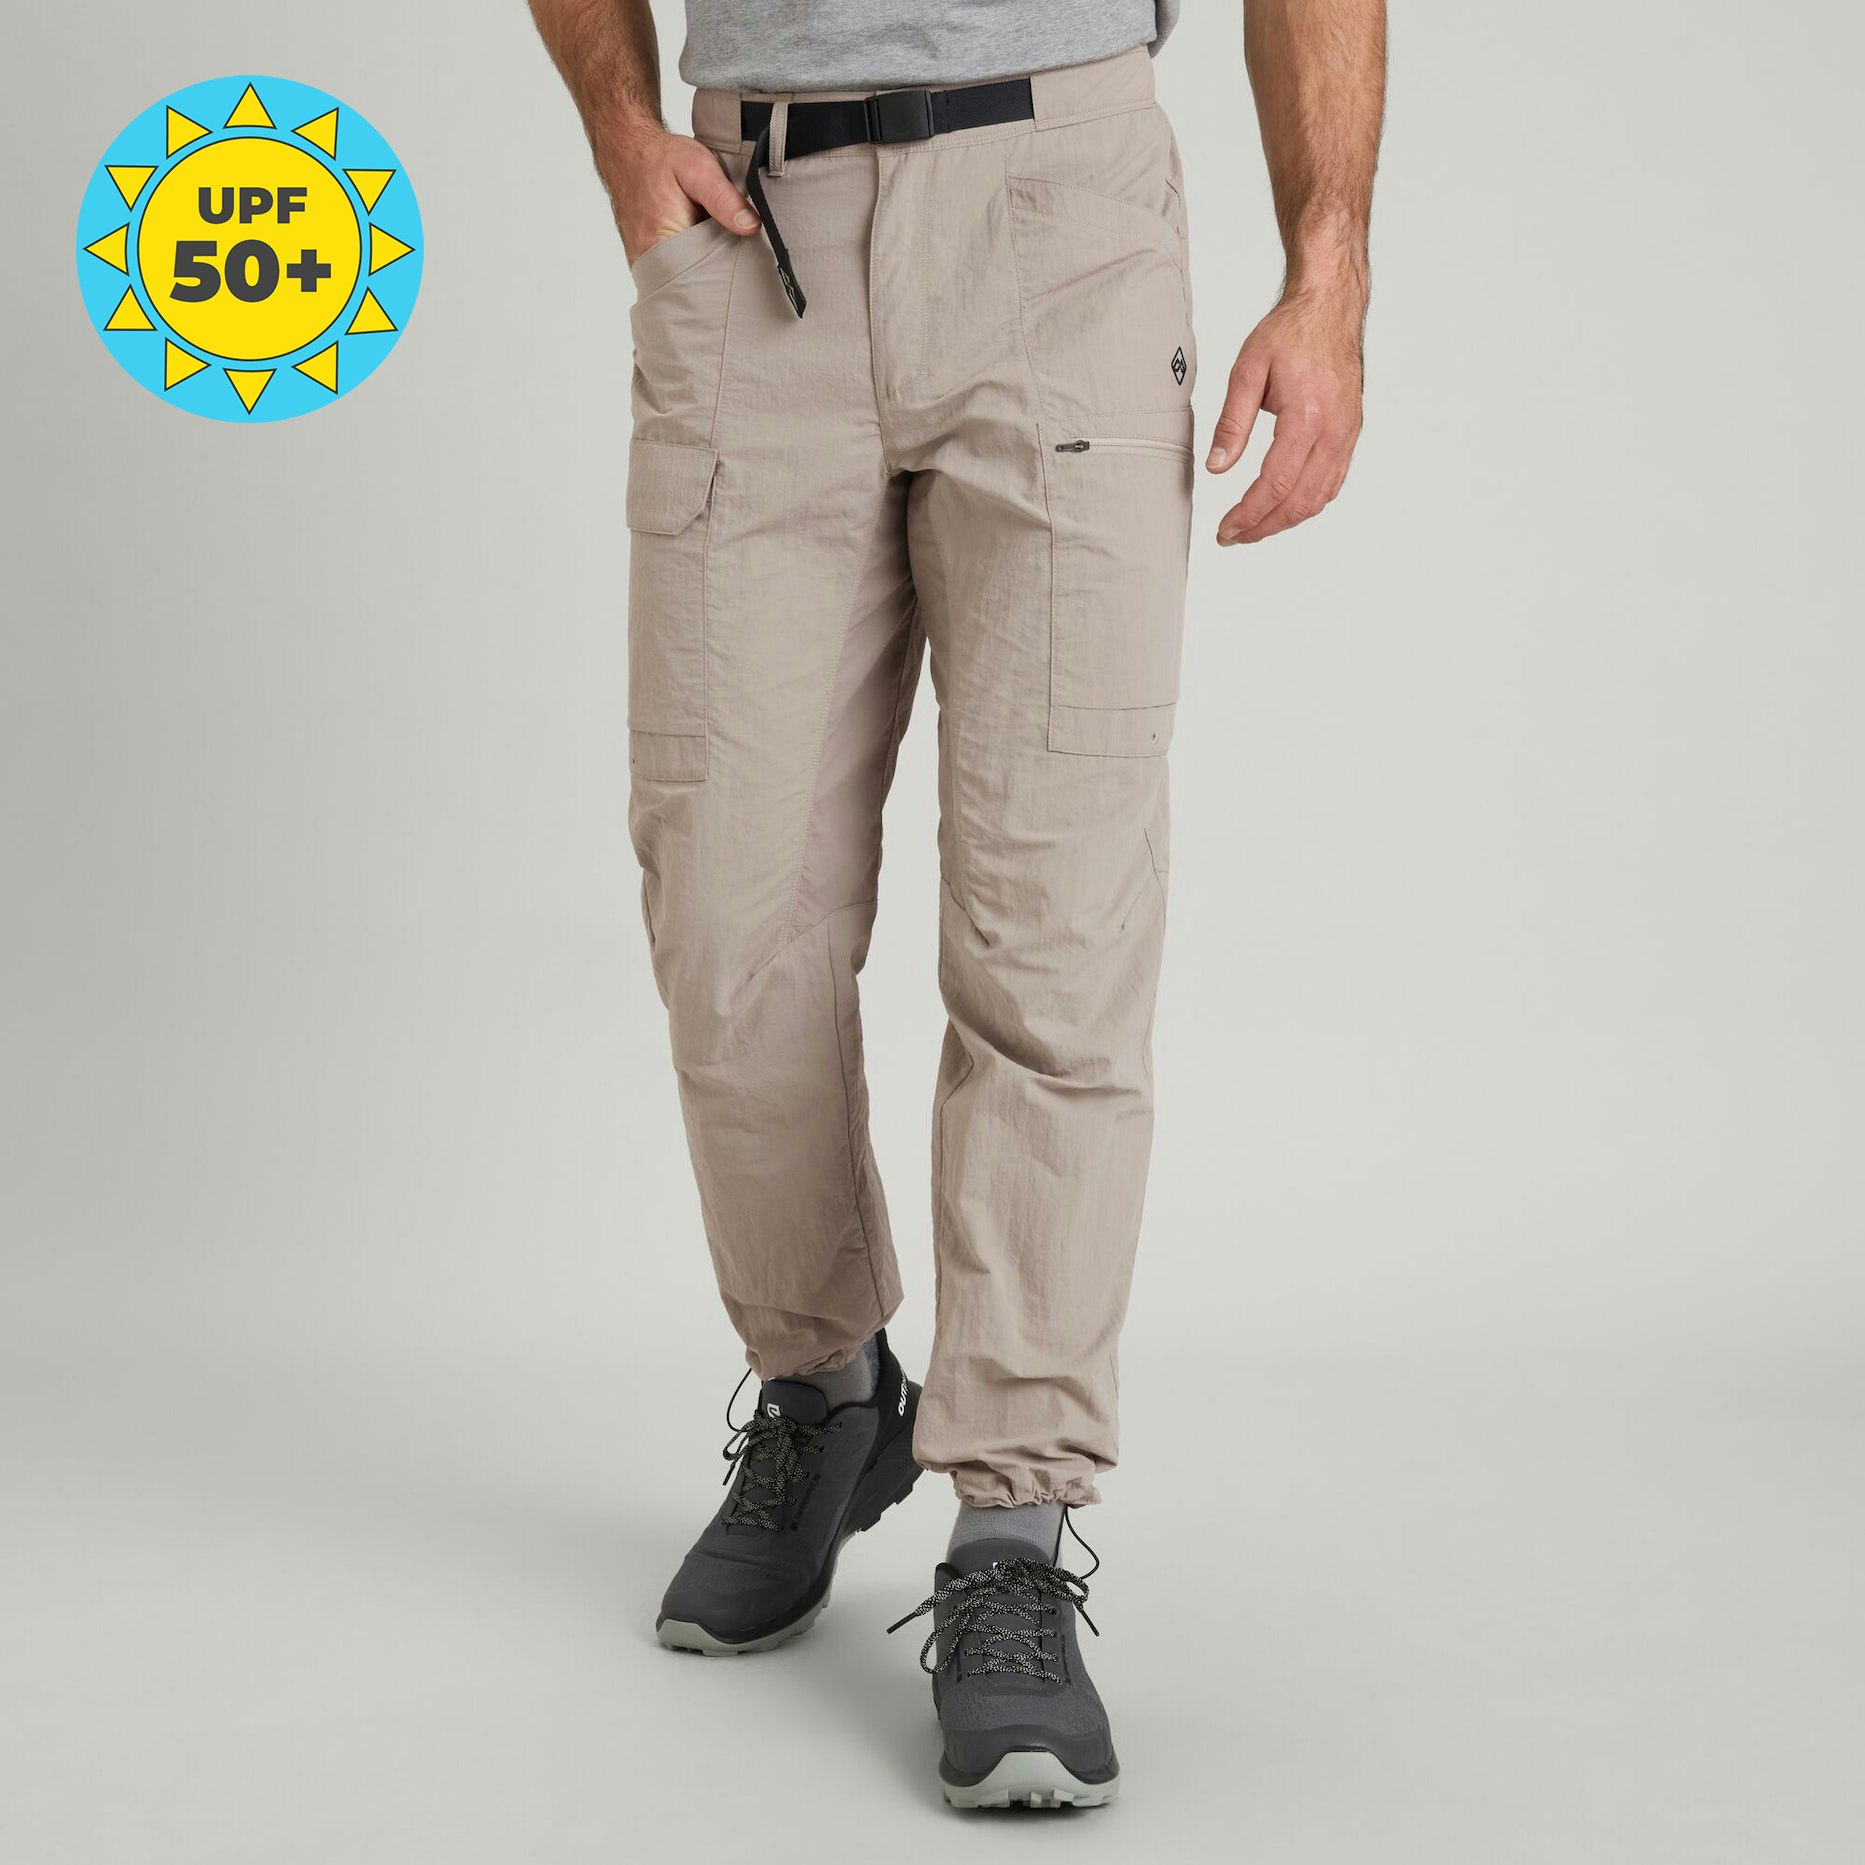 Kathmandu KMDAction Men's Long Johns Pants Steel Blue XS : :  Clothing, Shoes & Accessories